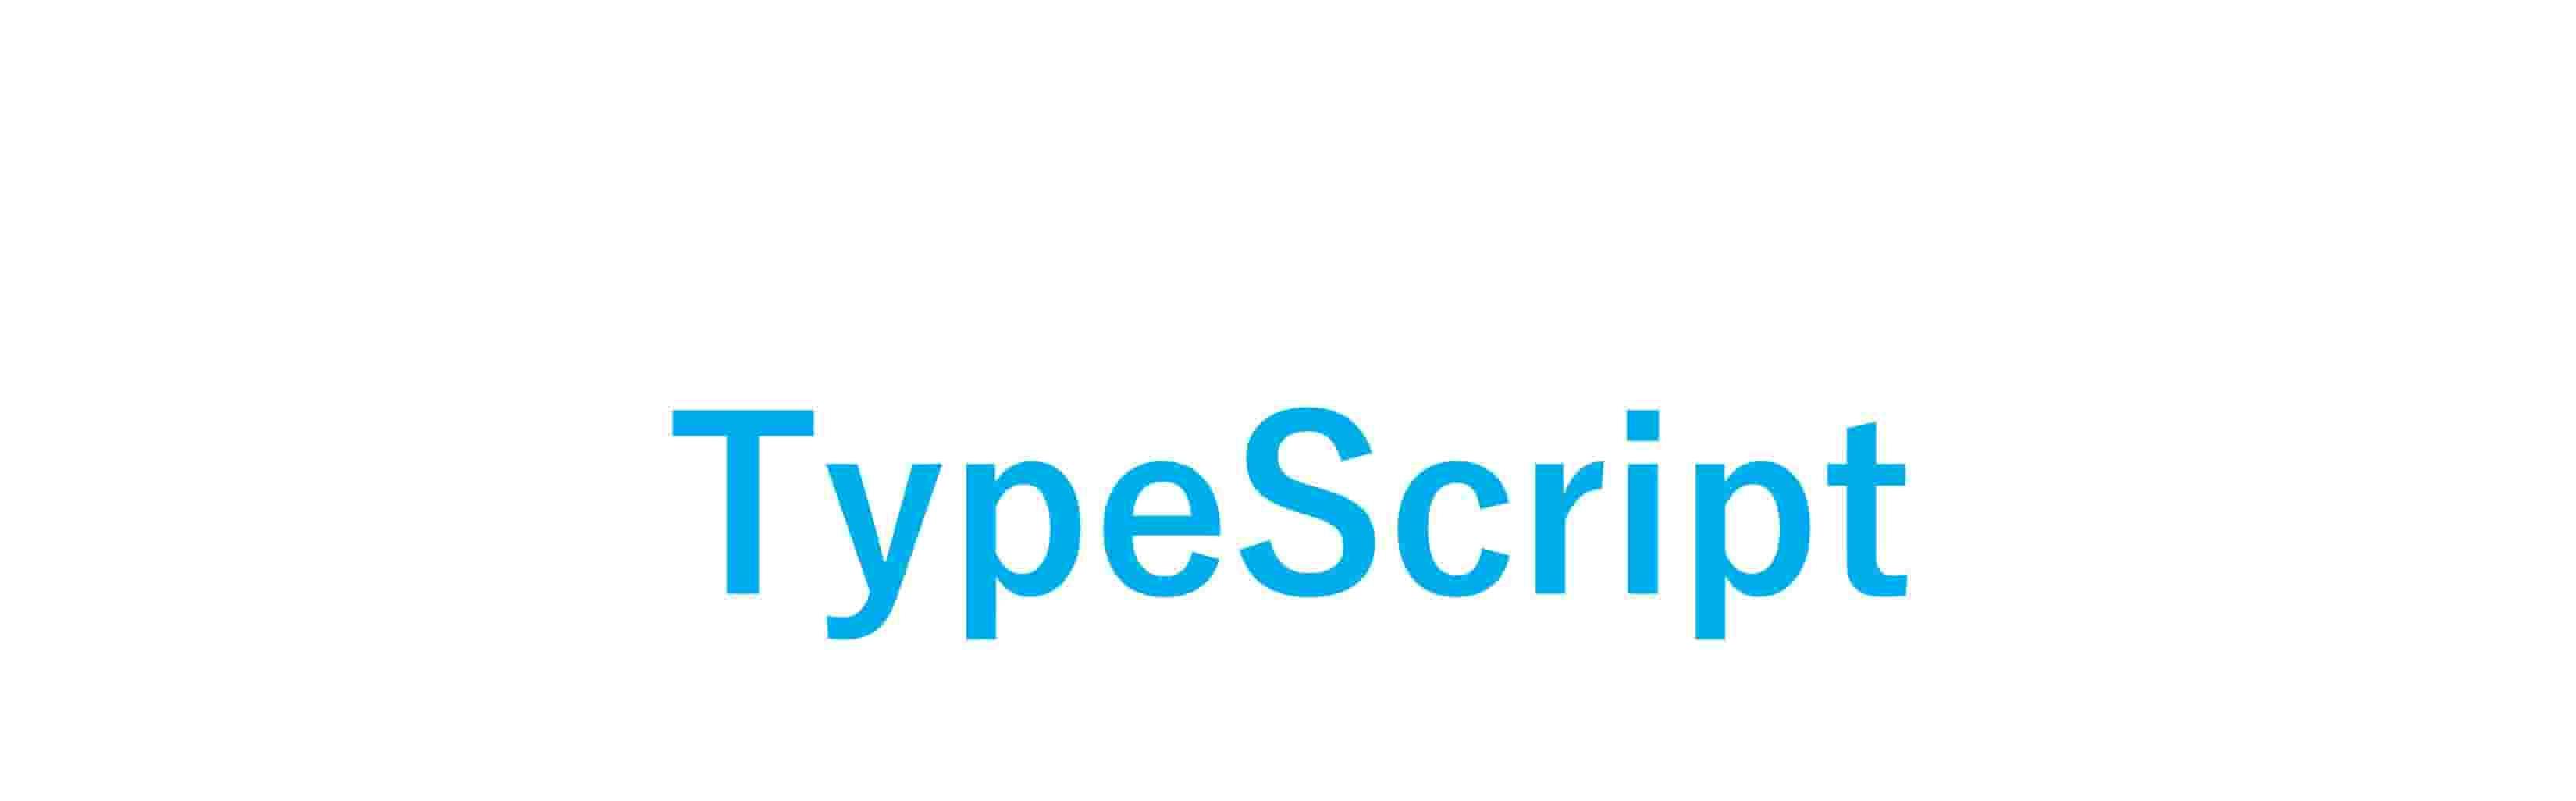 JavaScriptと比較したTypeScriptの使い方